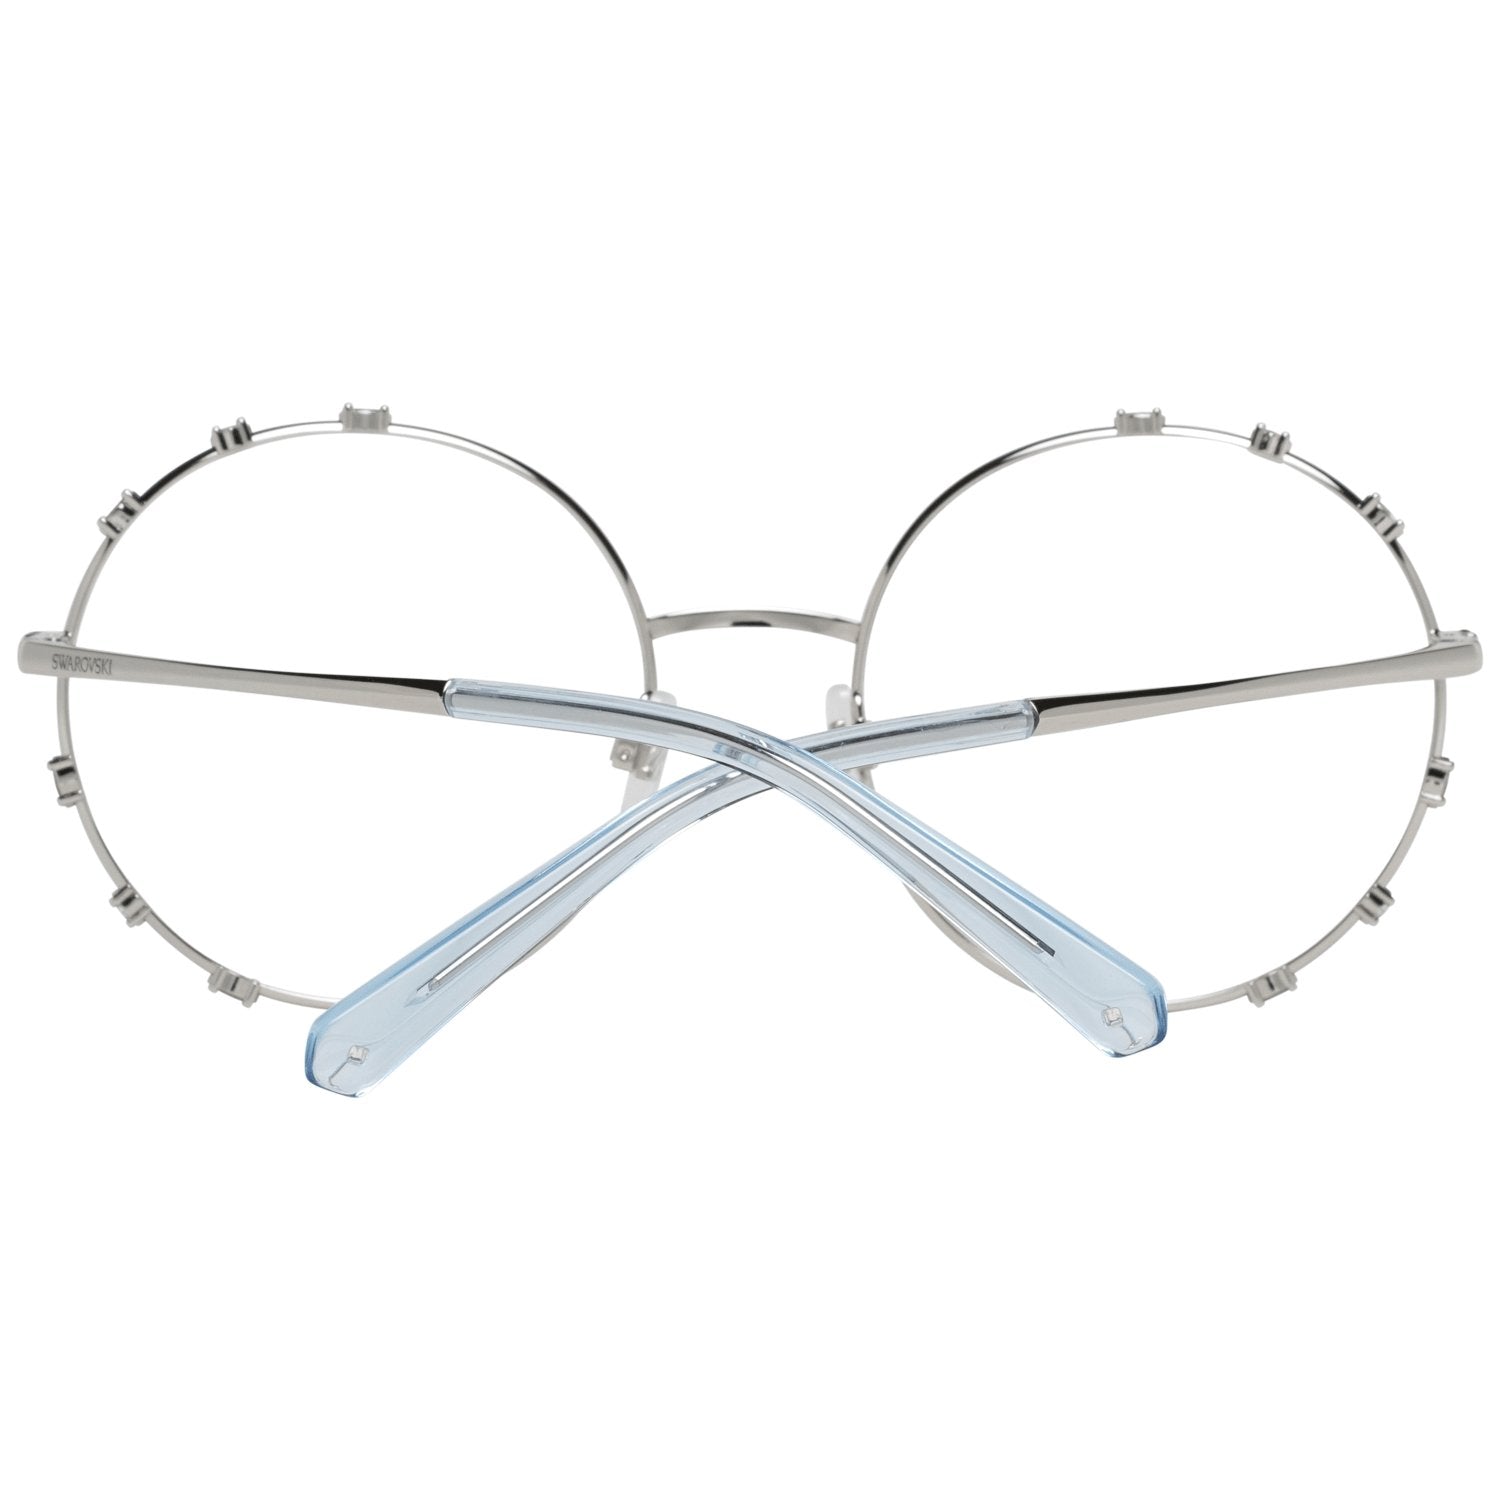 Swarovski Silver Frames for Woman - Fizigo